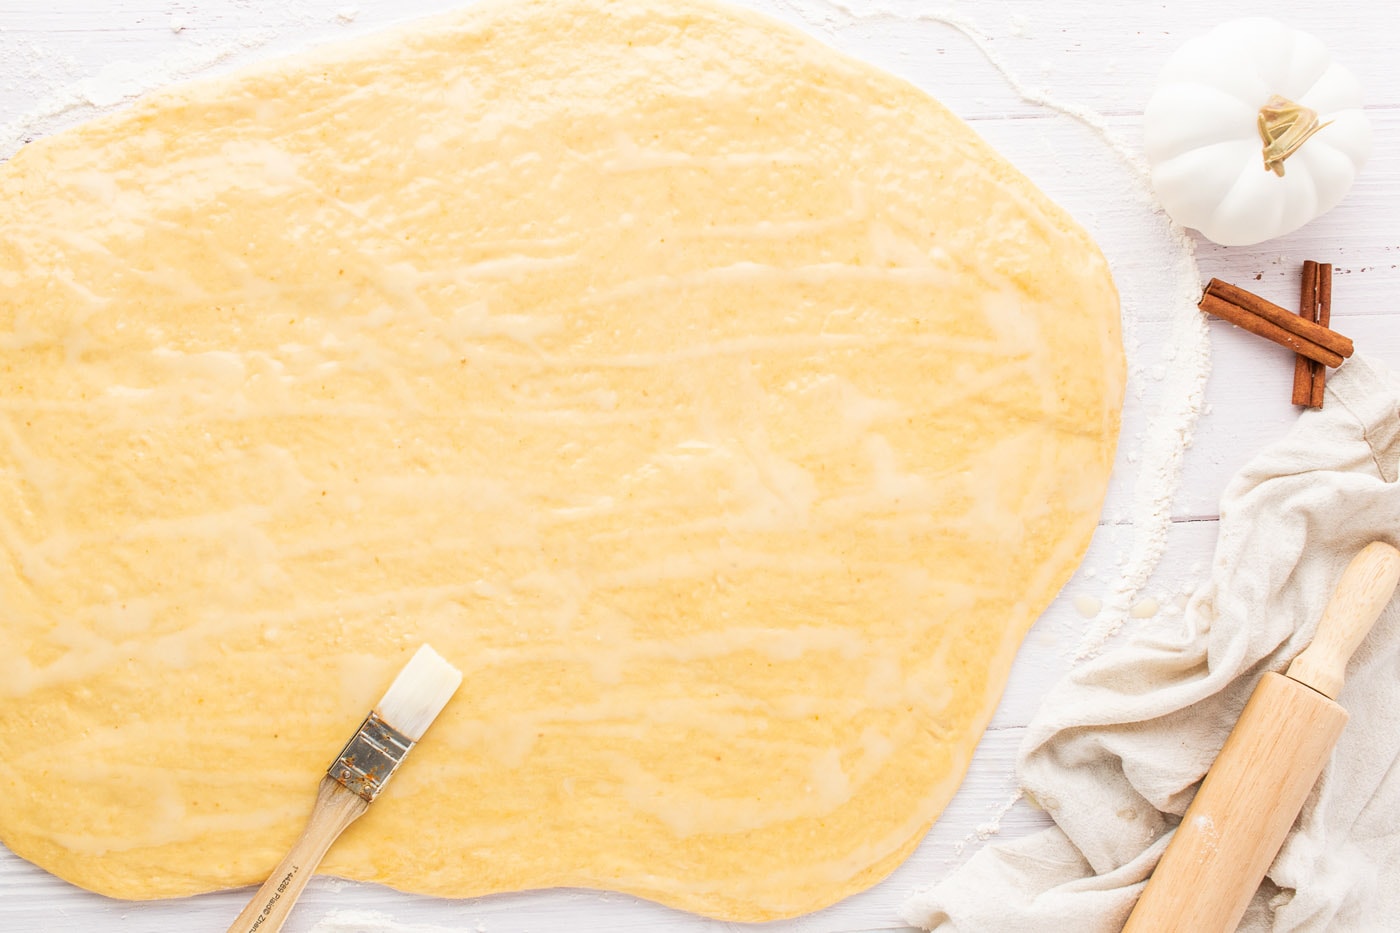 spreading butter over dough